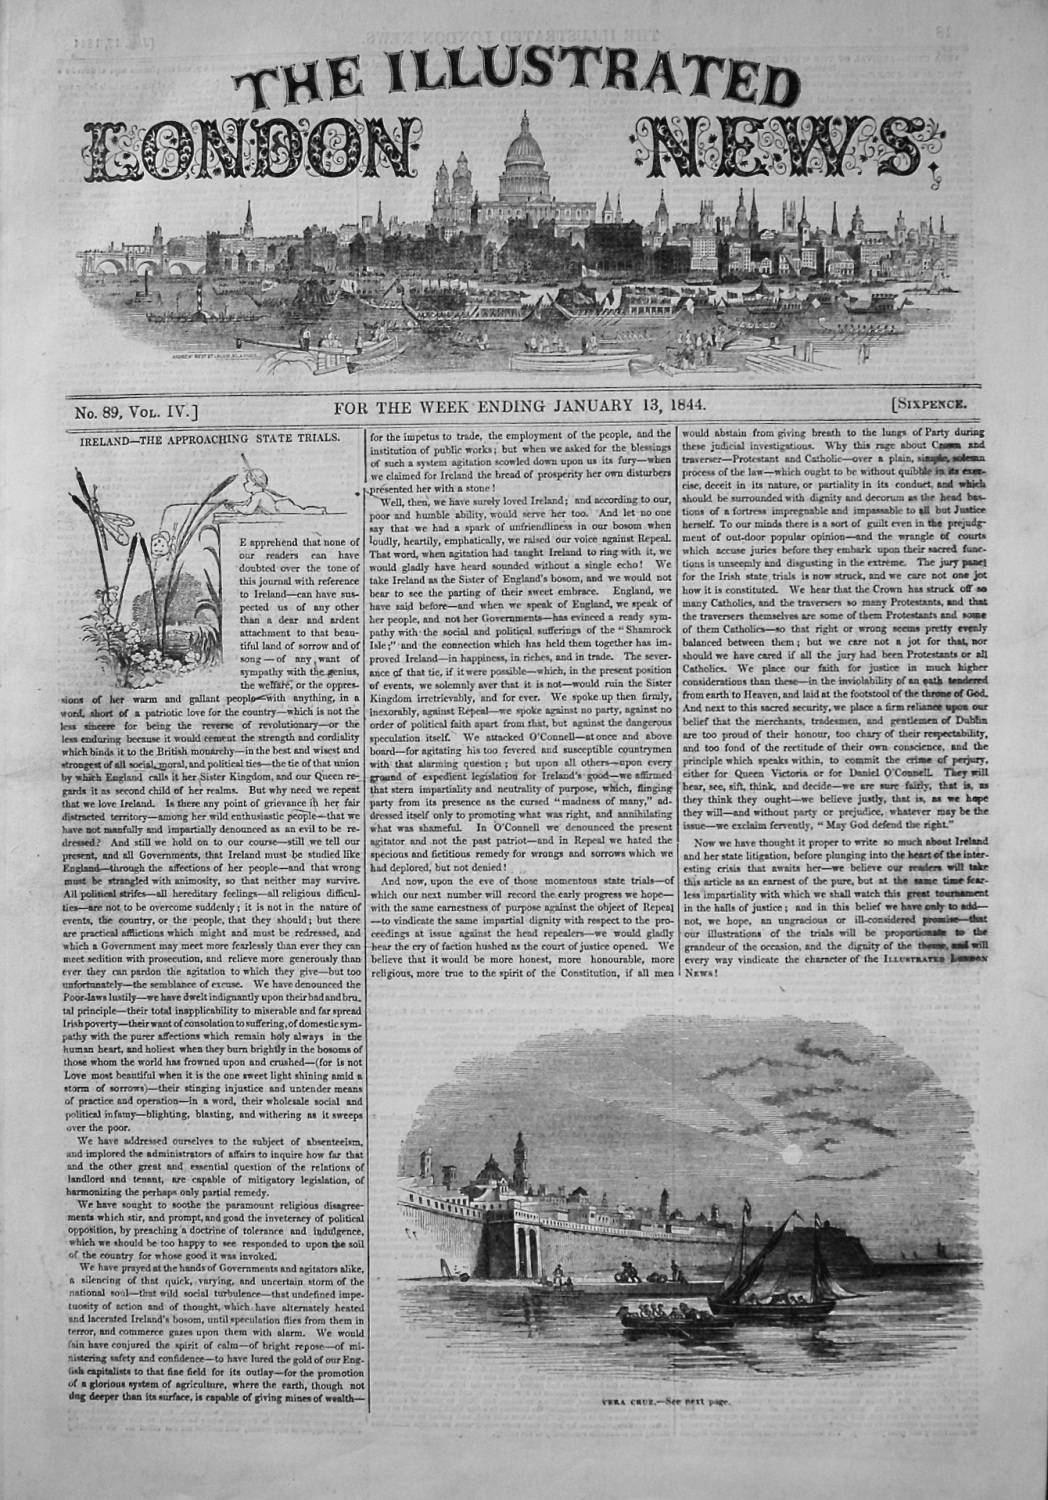 Illustrated London News. January 13th, 1844.